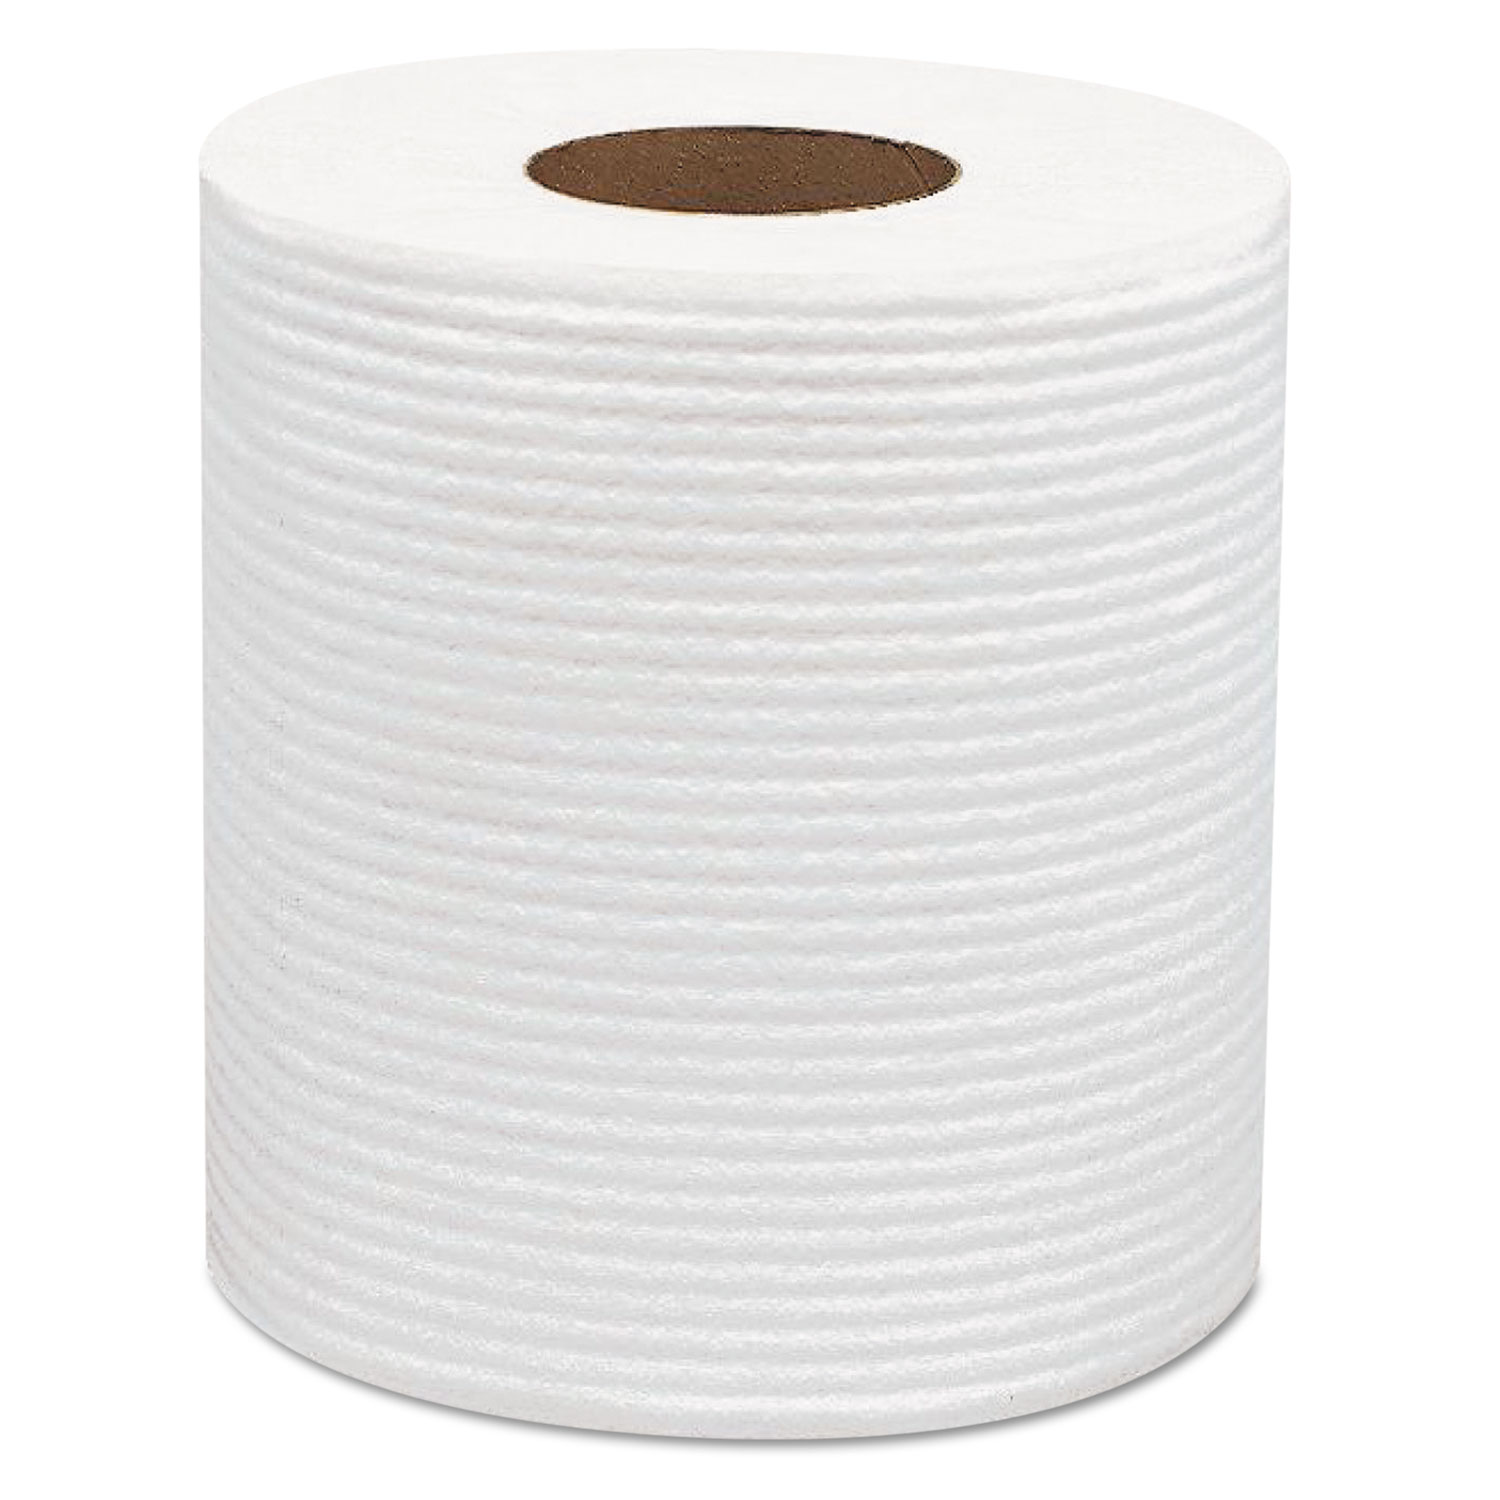 Two-Ply Bathroom Tissue, 451 Sheets/Roll, 60 Rolls/Carton